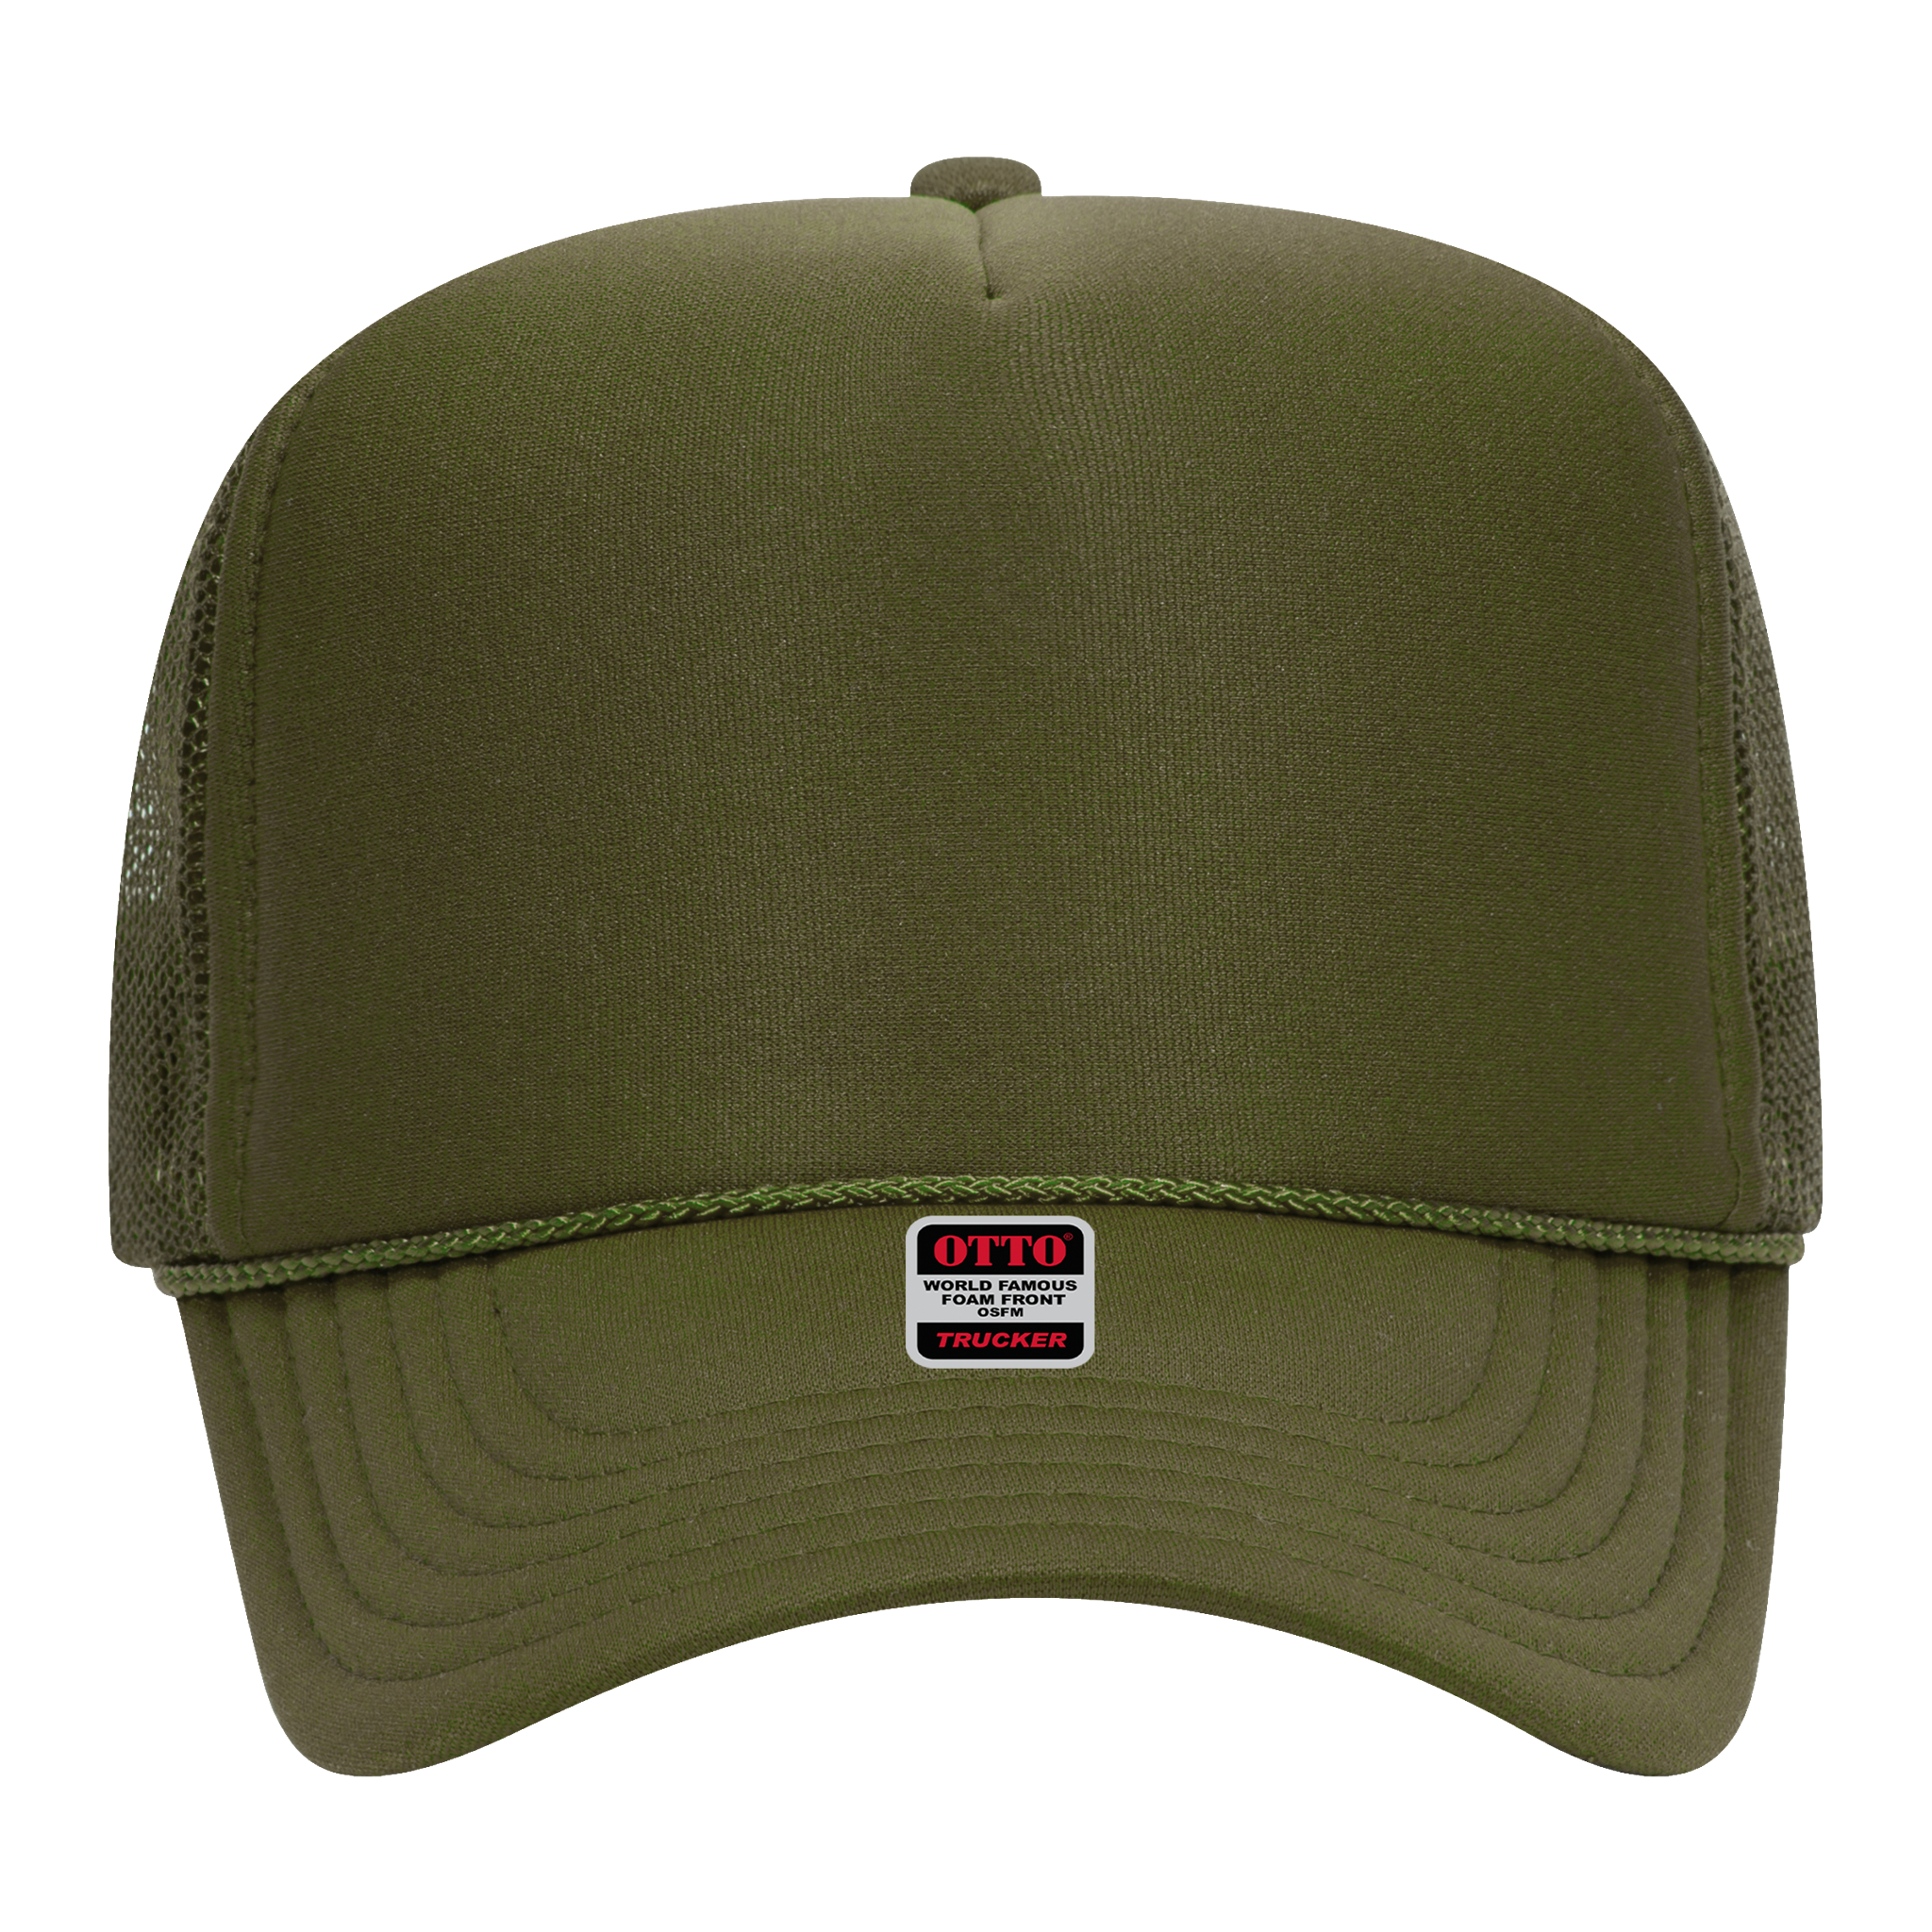 OTTO Cap 39-169 - High Crown Polyester Foam Front 5-Panel Trucker Hat $3.60  - Headwear